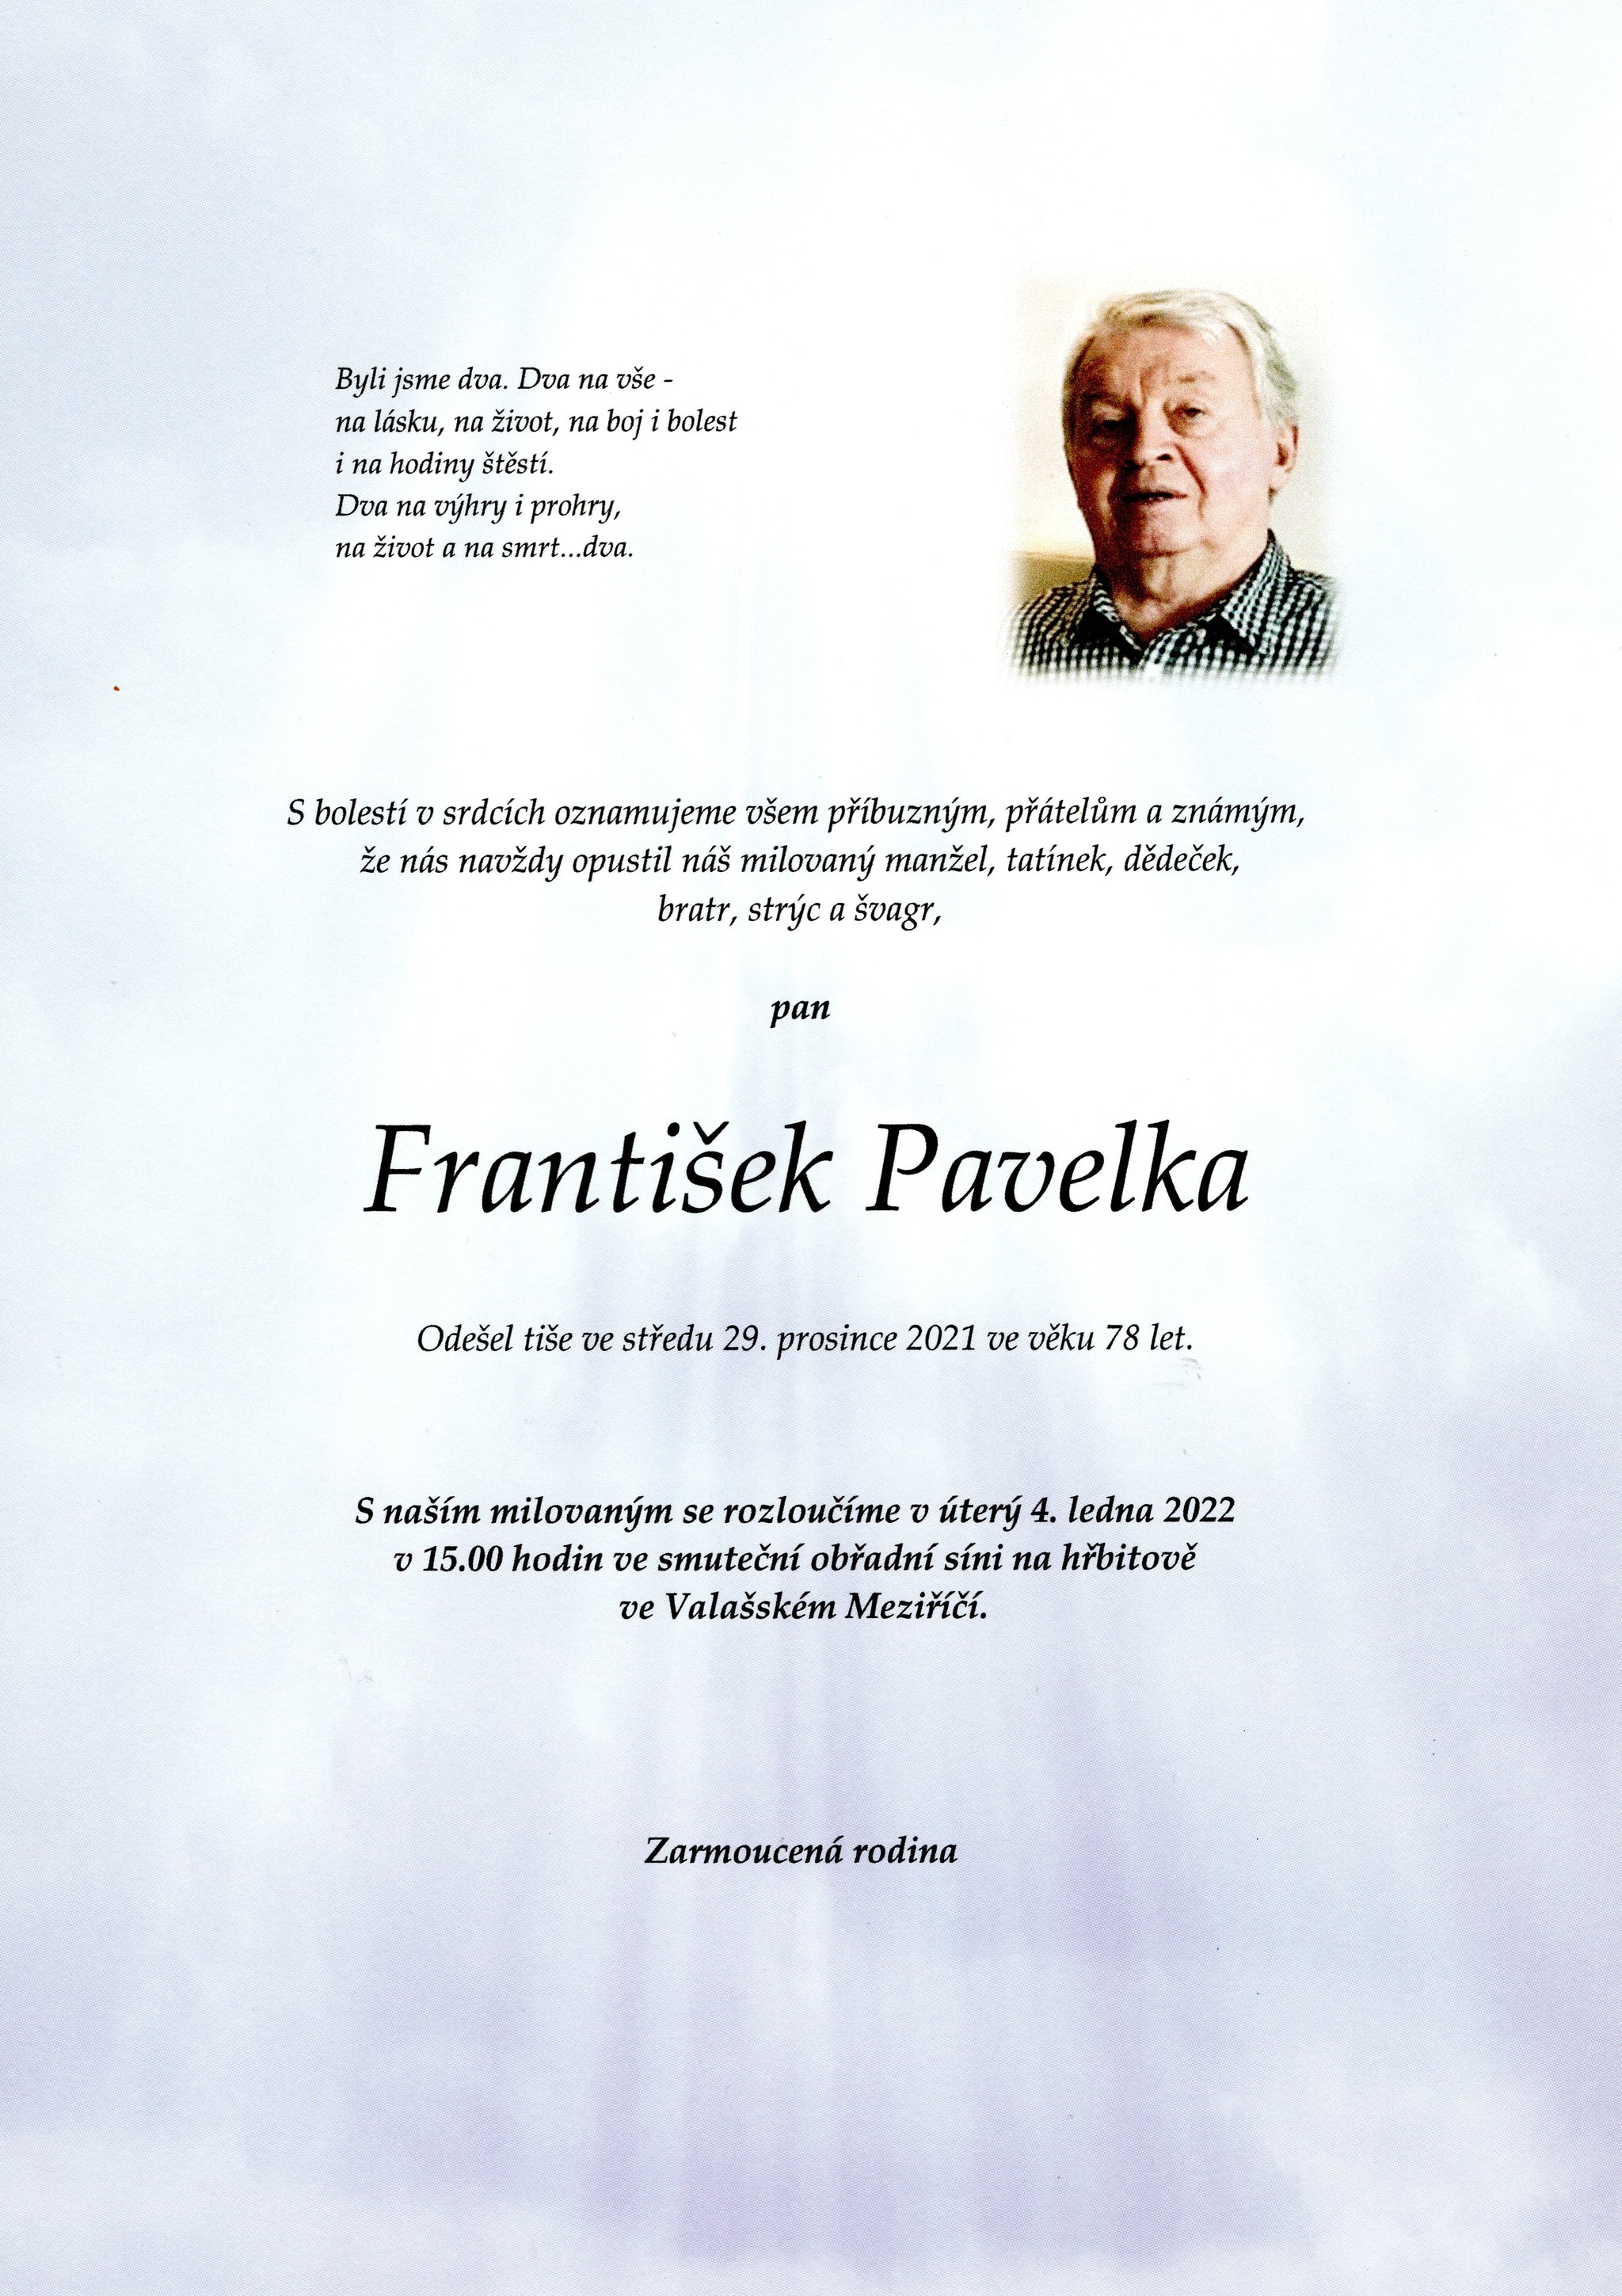 František Pavelka